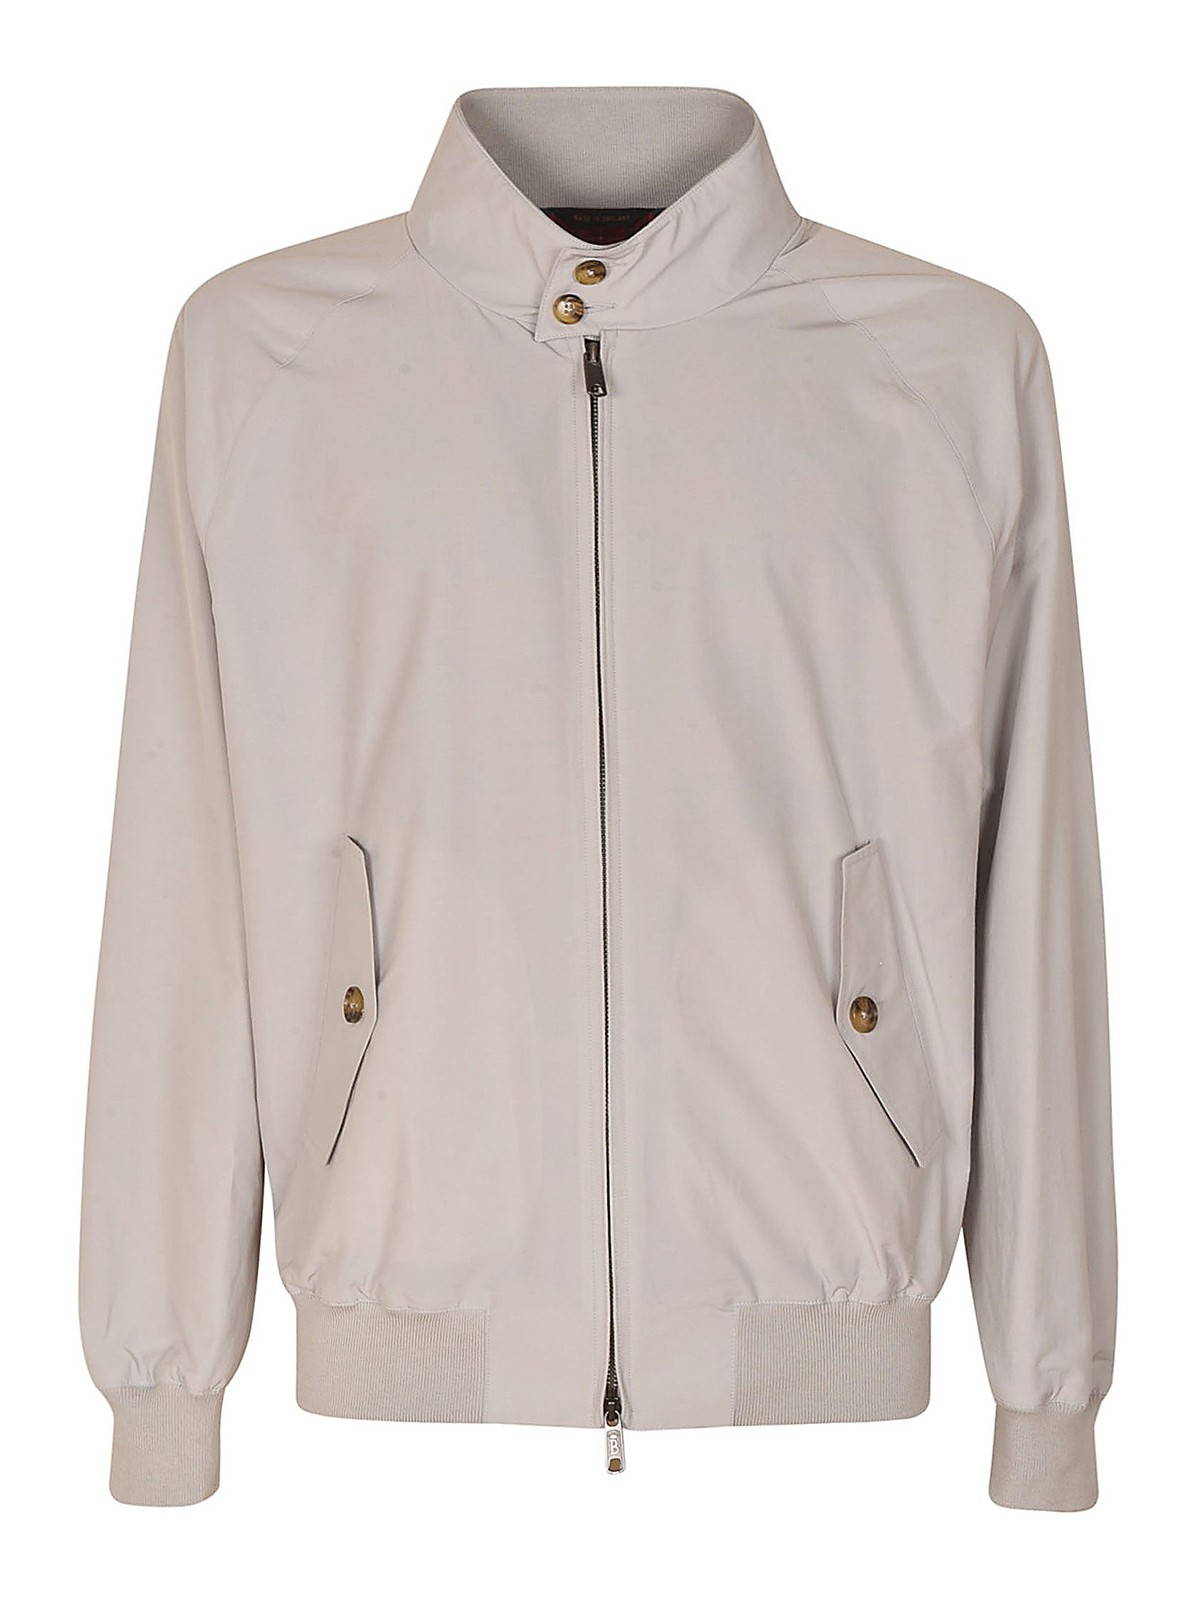 Casual jackets Baracuta - G9 jacket - BRCPS00011007 | Shop online at iKRIX